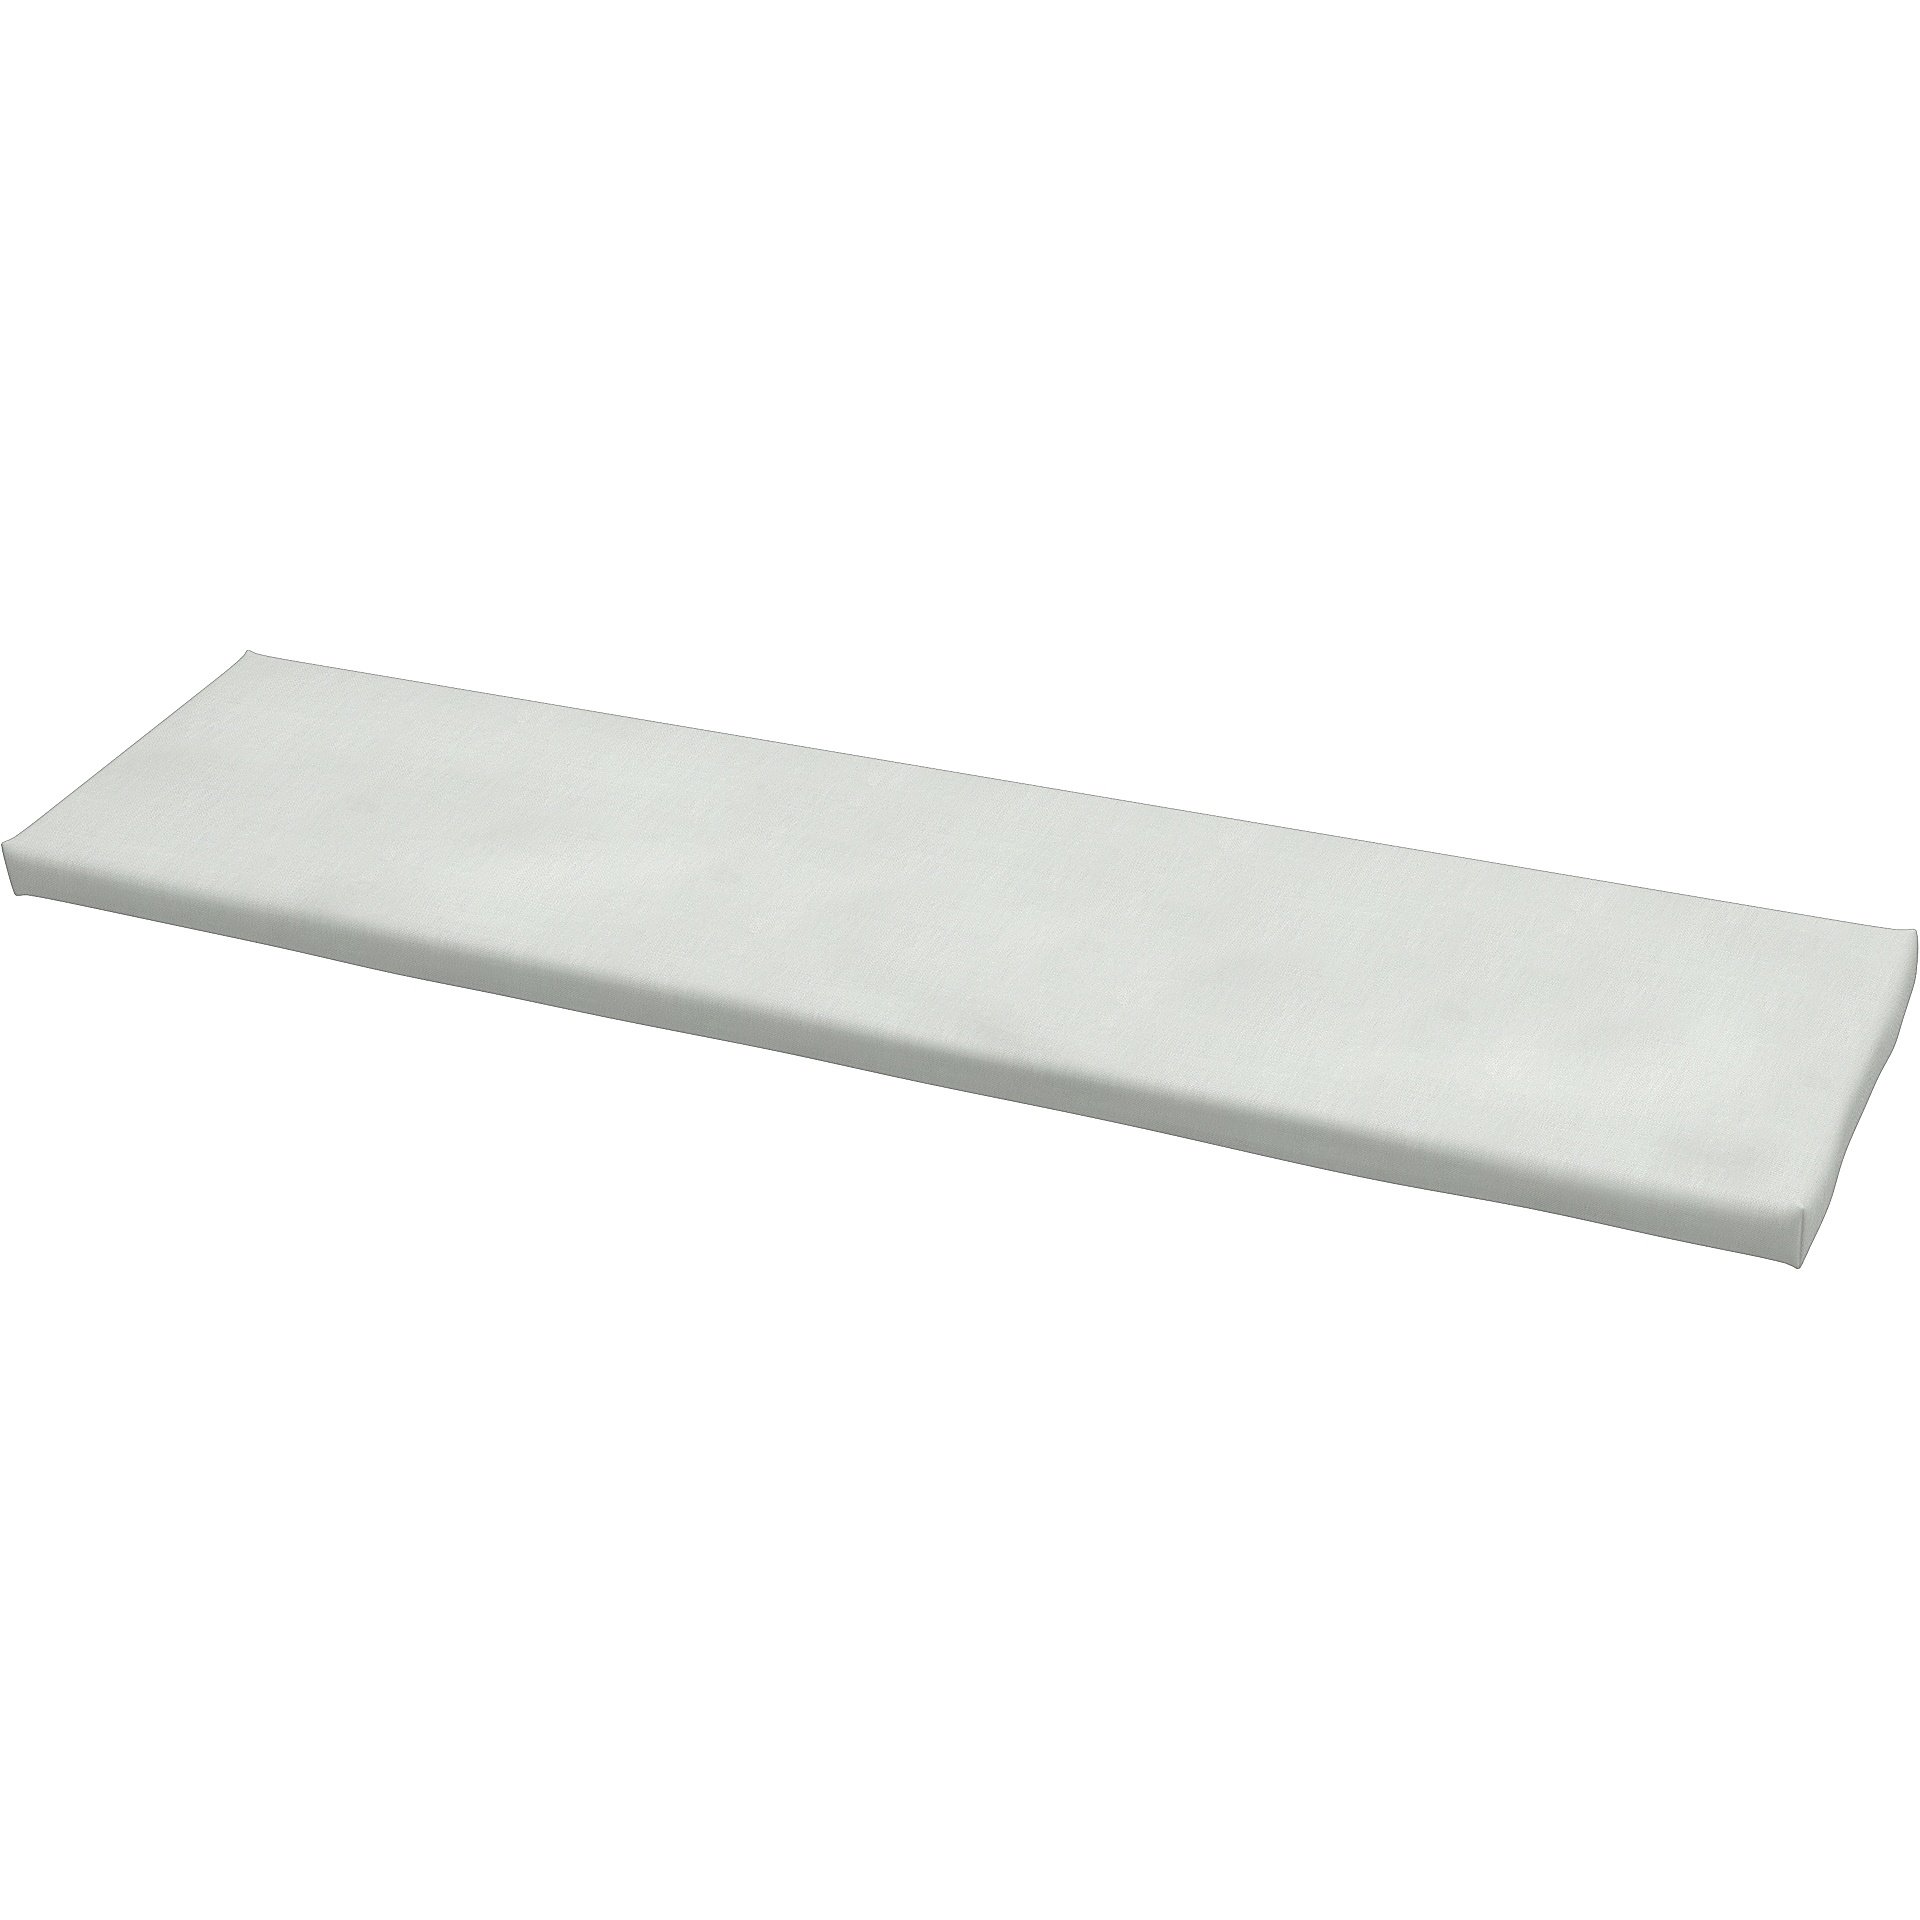 IKEA - Universal bench cushion cover 140x35x3,5 cm, Silver Grey, Linen - Bemz